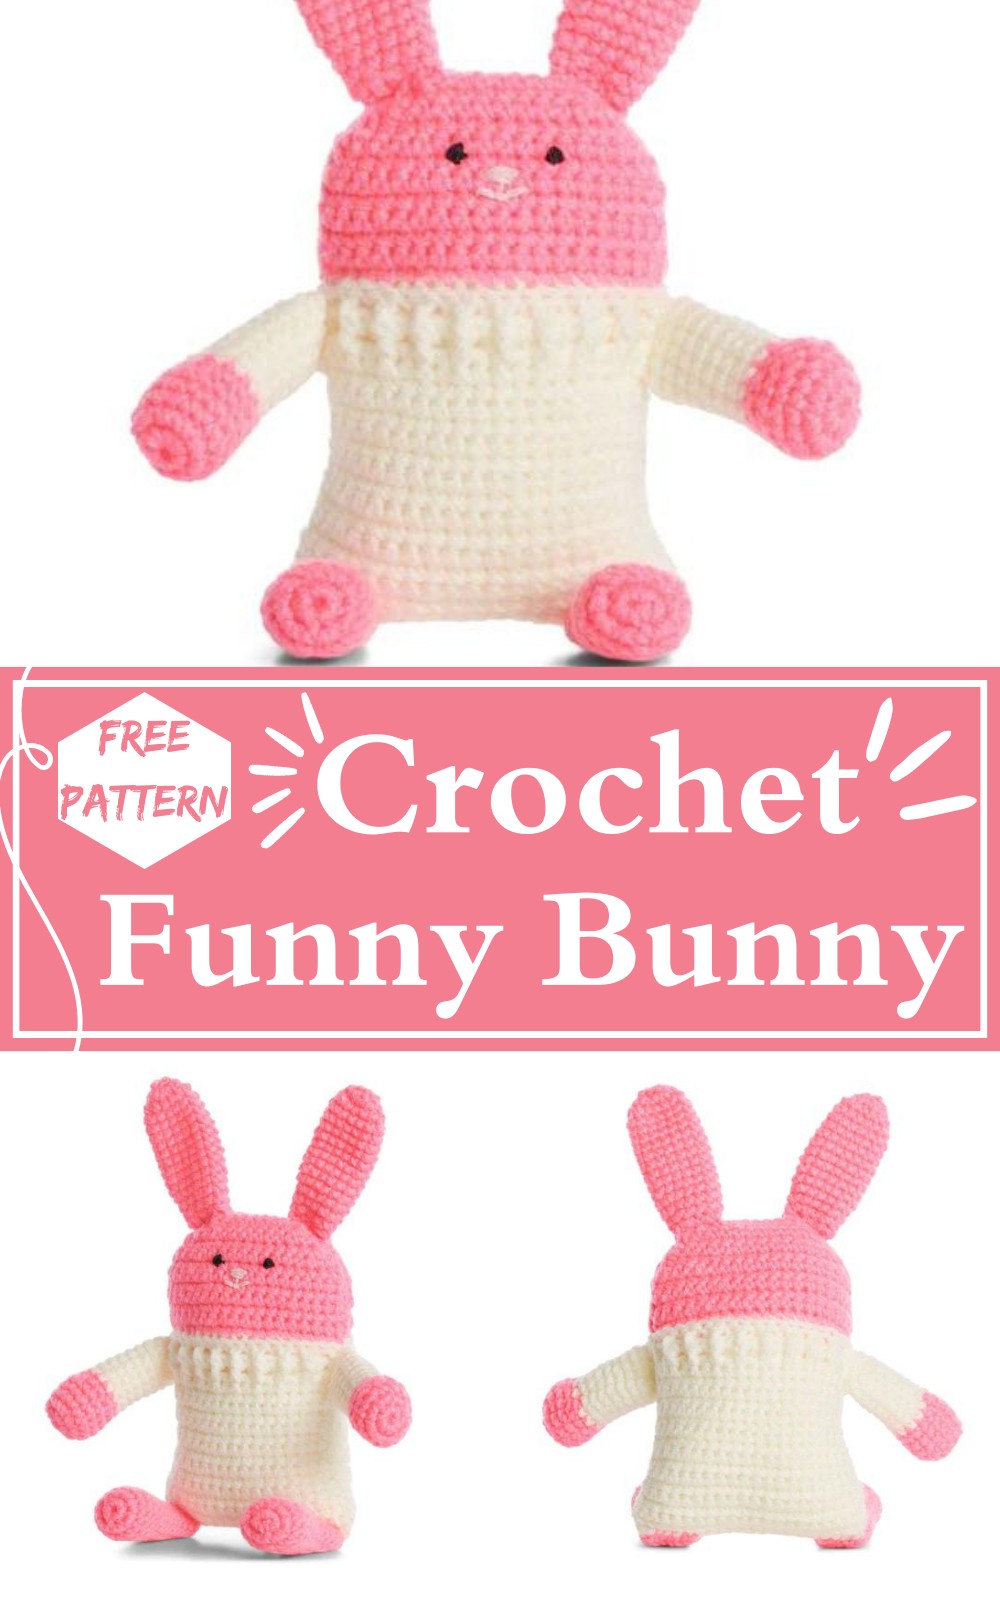 Crochet Funny Bunny